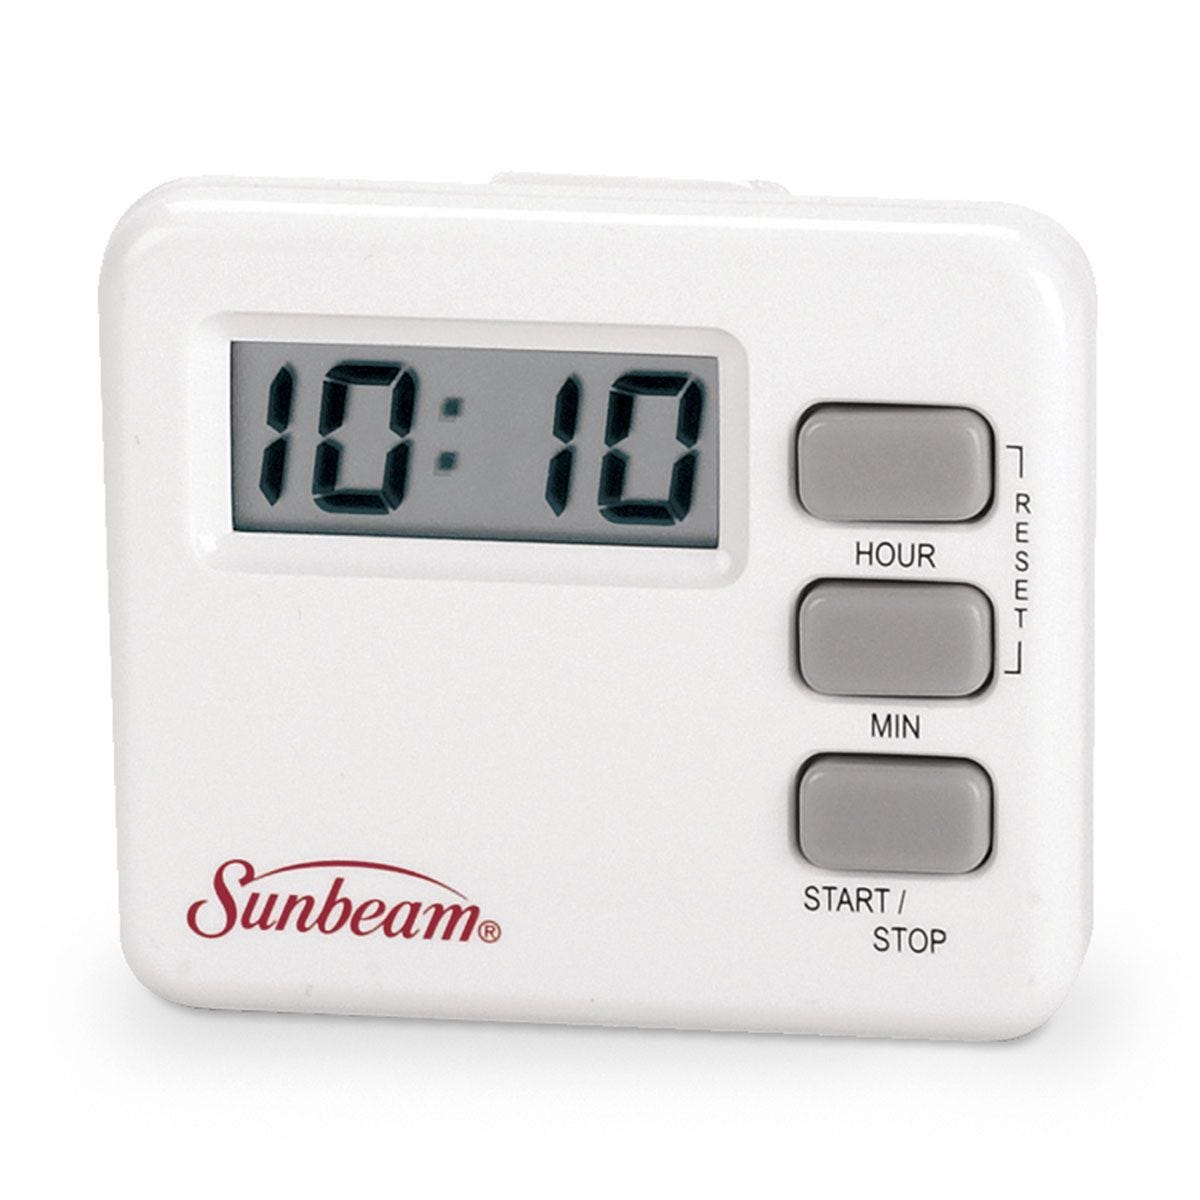 Customized Digital Kitchen Timer and Alarm Clocks, Clocks